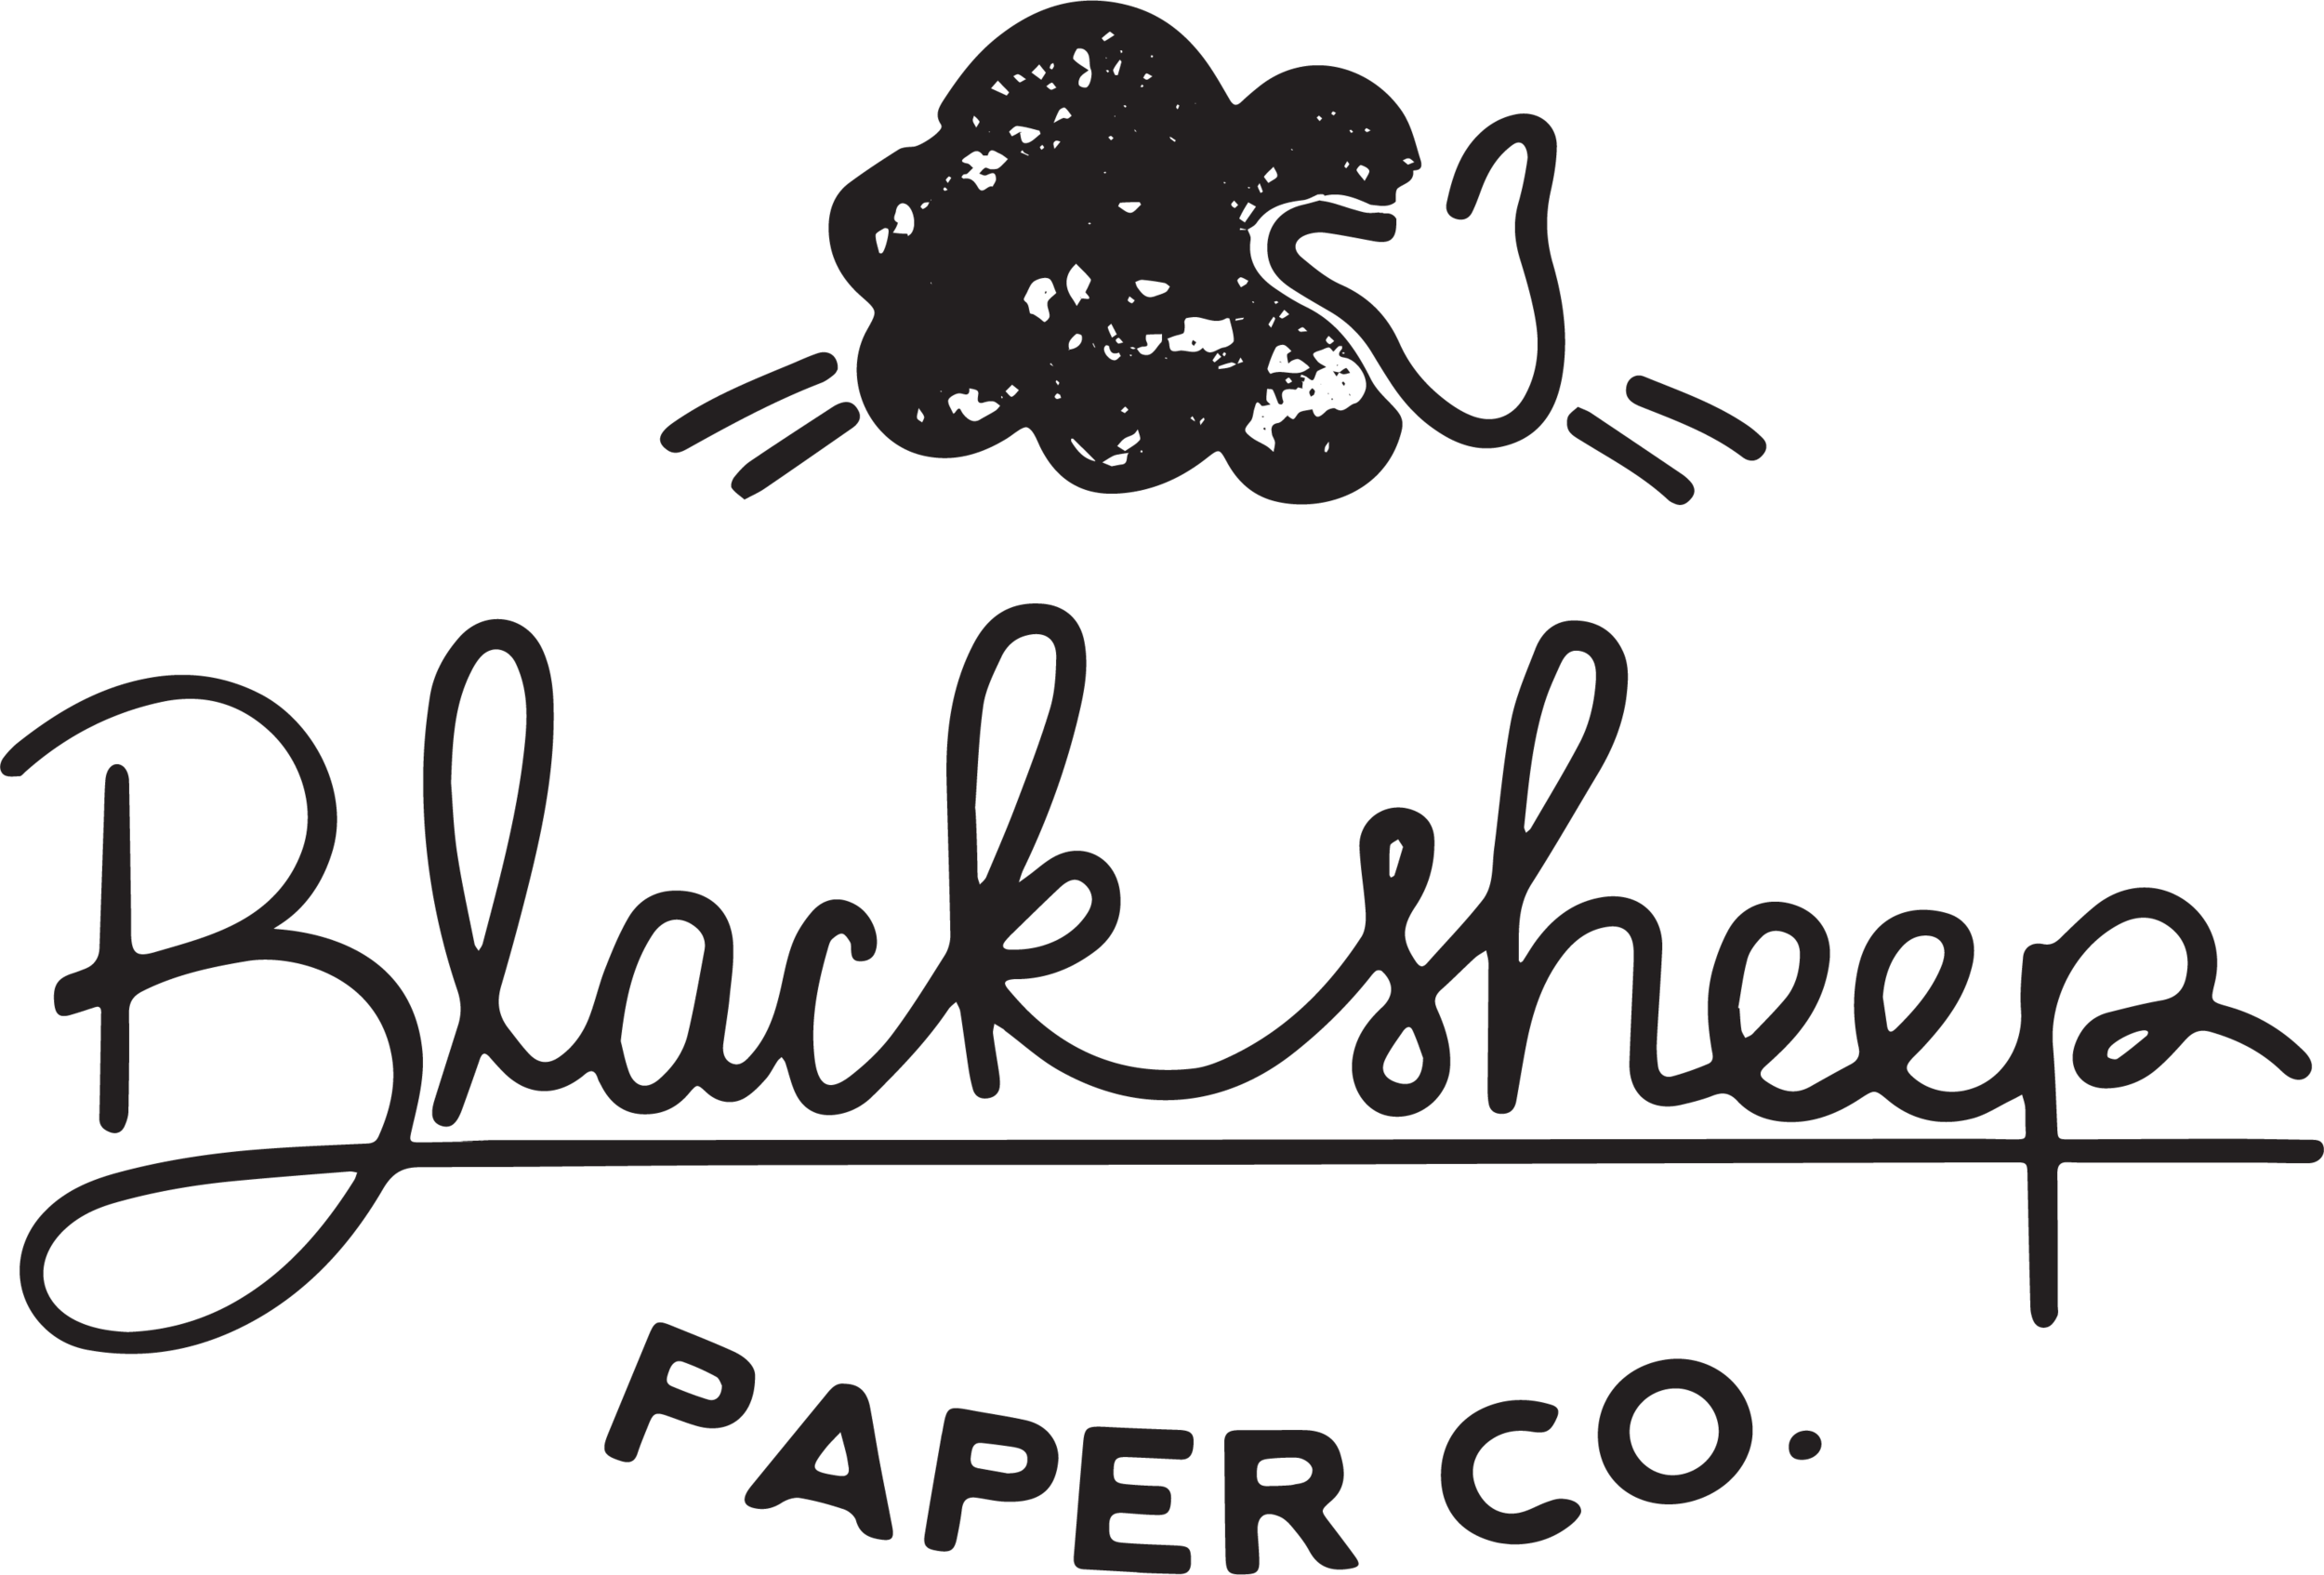 blacksheep paper co.